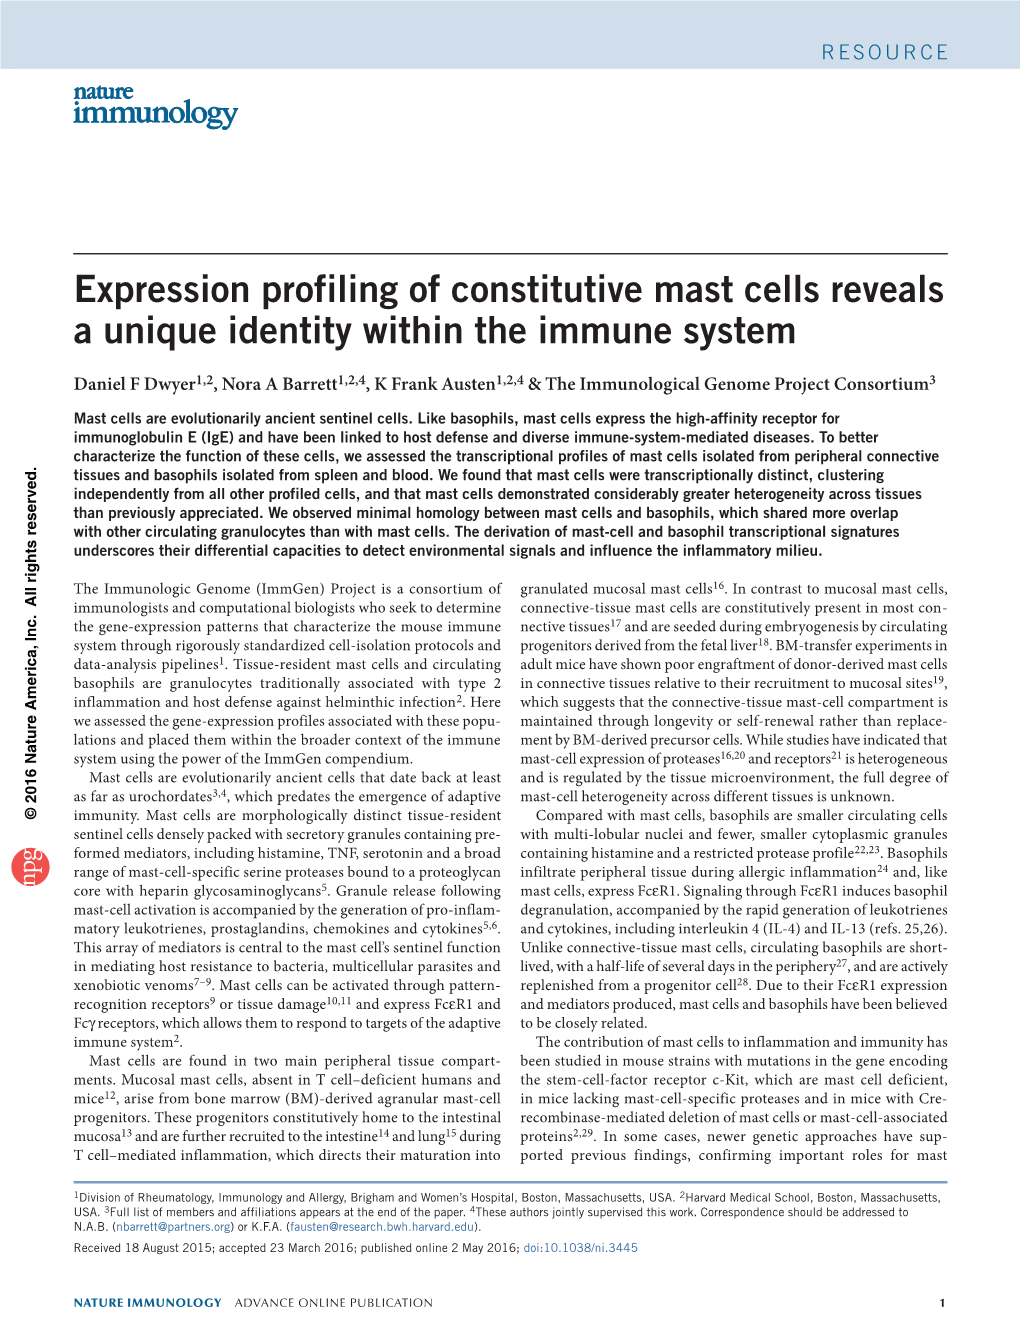 Expression Profiling of Constitutive Mast Cells Reveals a Unique Identity